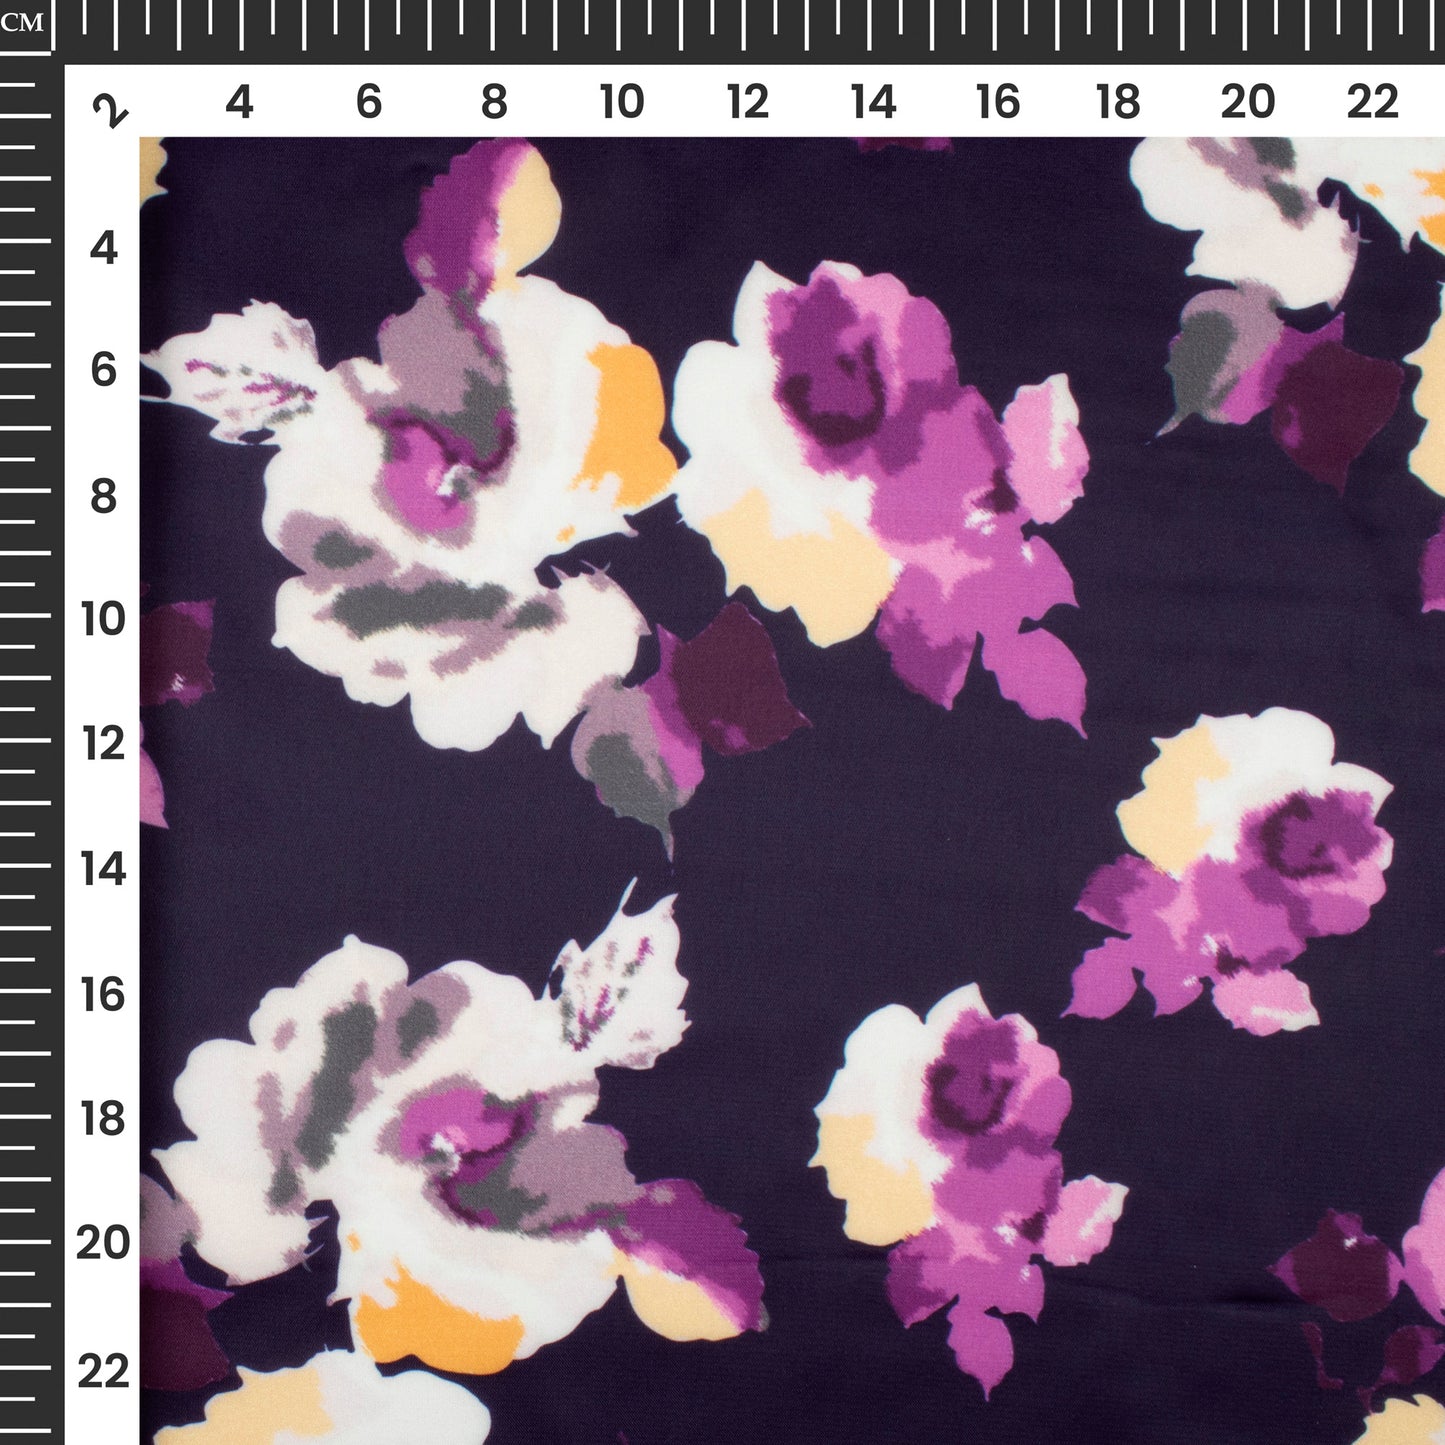 Bestselling Floral Digital Print Organza Satin Fabric